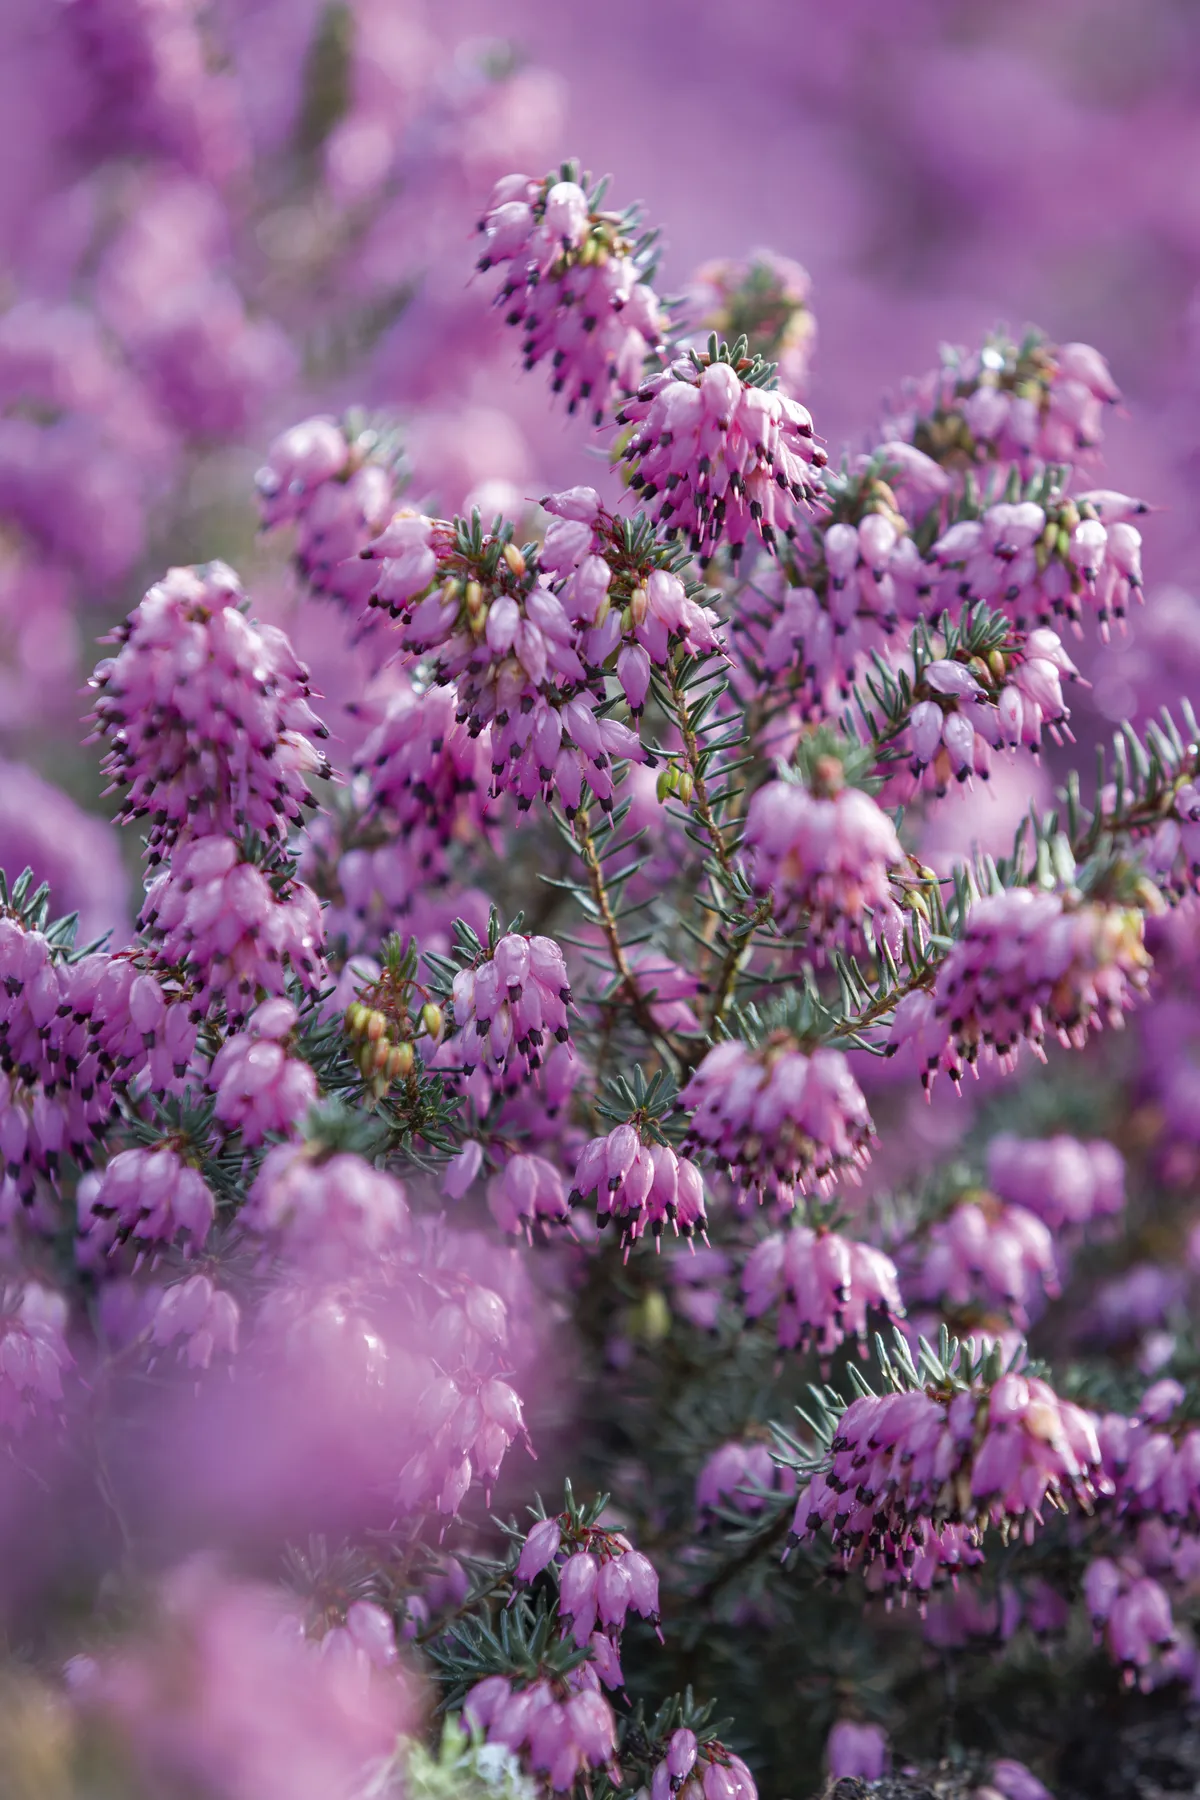 Erica x darleyensis ‘Rubina’ A decorative, winter-flowering pink form of this sprawling shrub that will spread to form a low, evergreen mound. 40cm x 80cm. RHS H5, USDA 5a-8b.